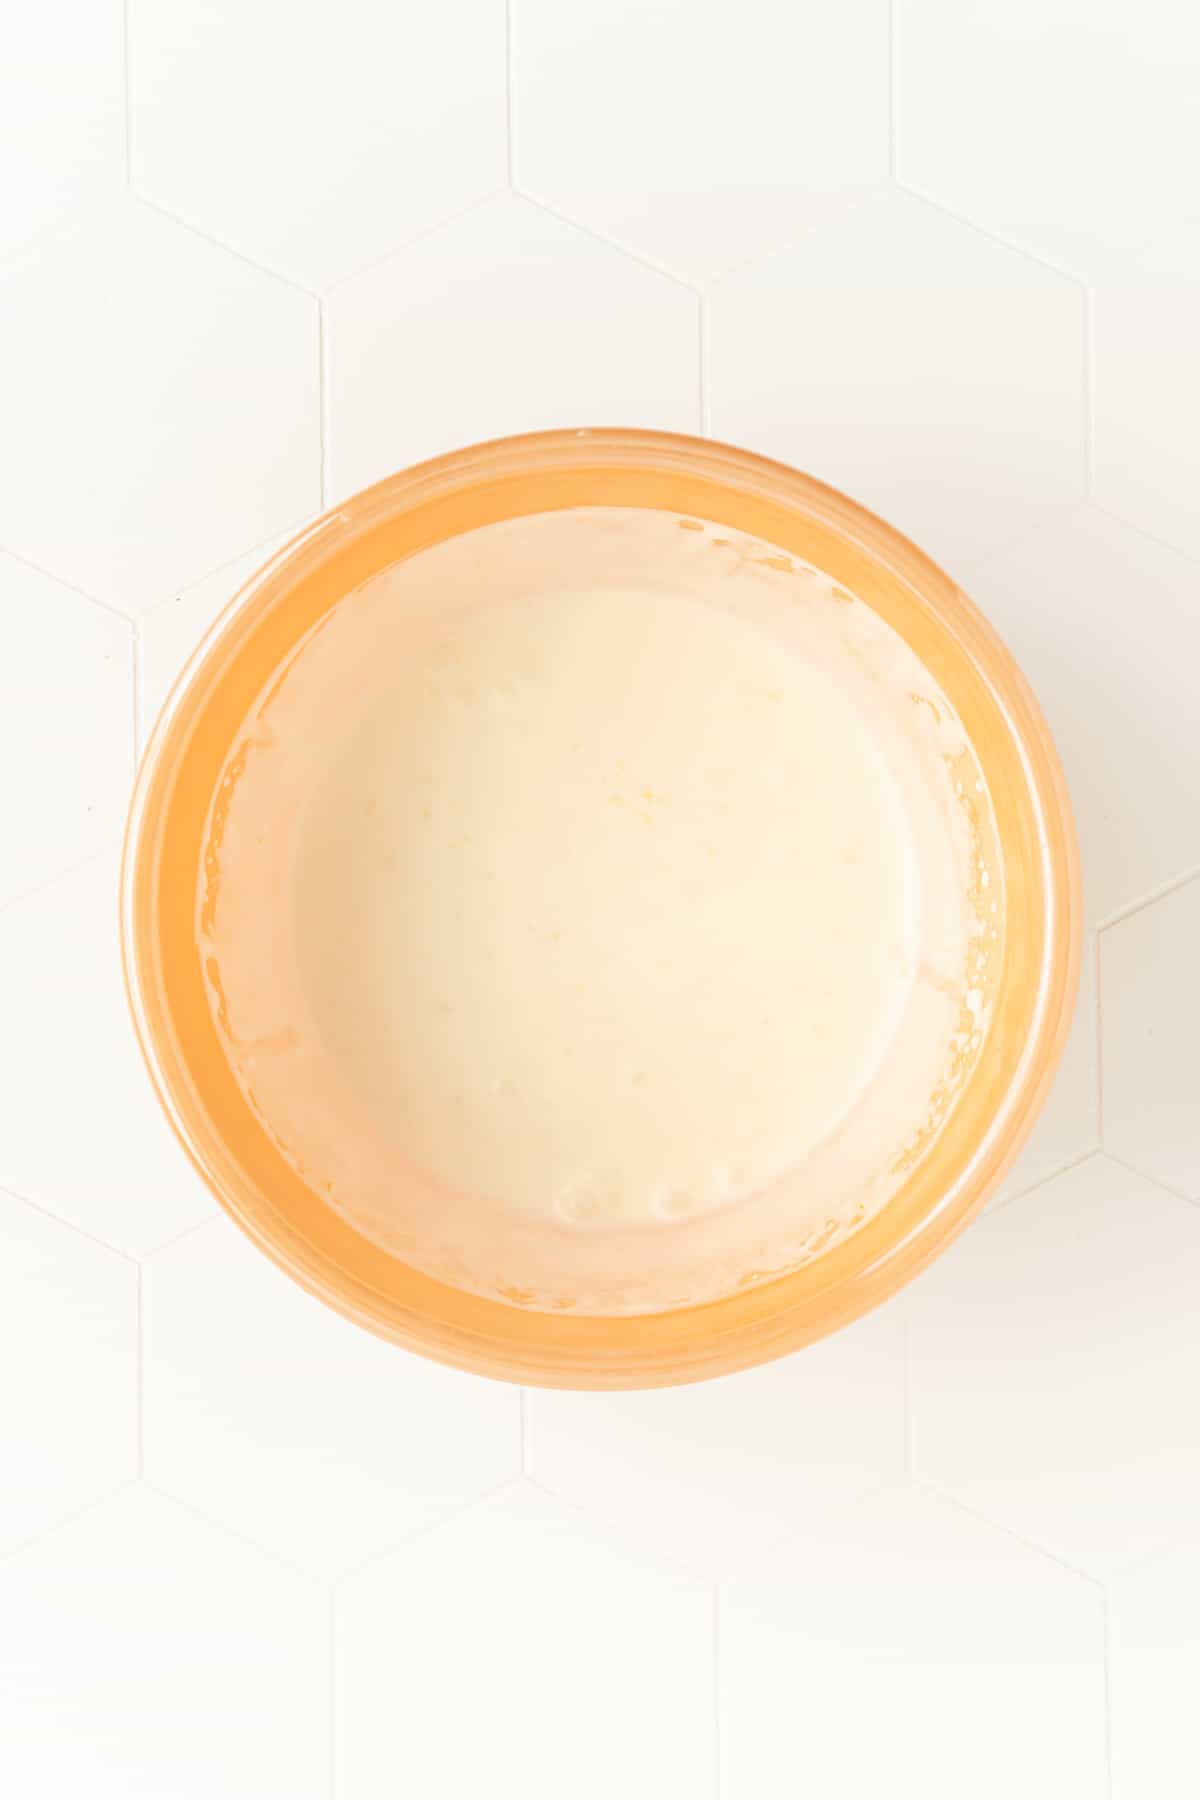 liquid fresh lemon whipped cream mixture in the orange mixing bowl